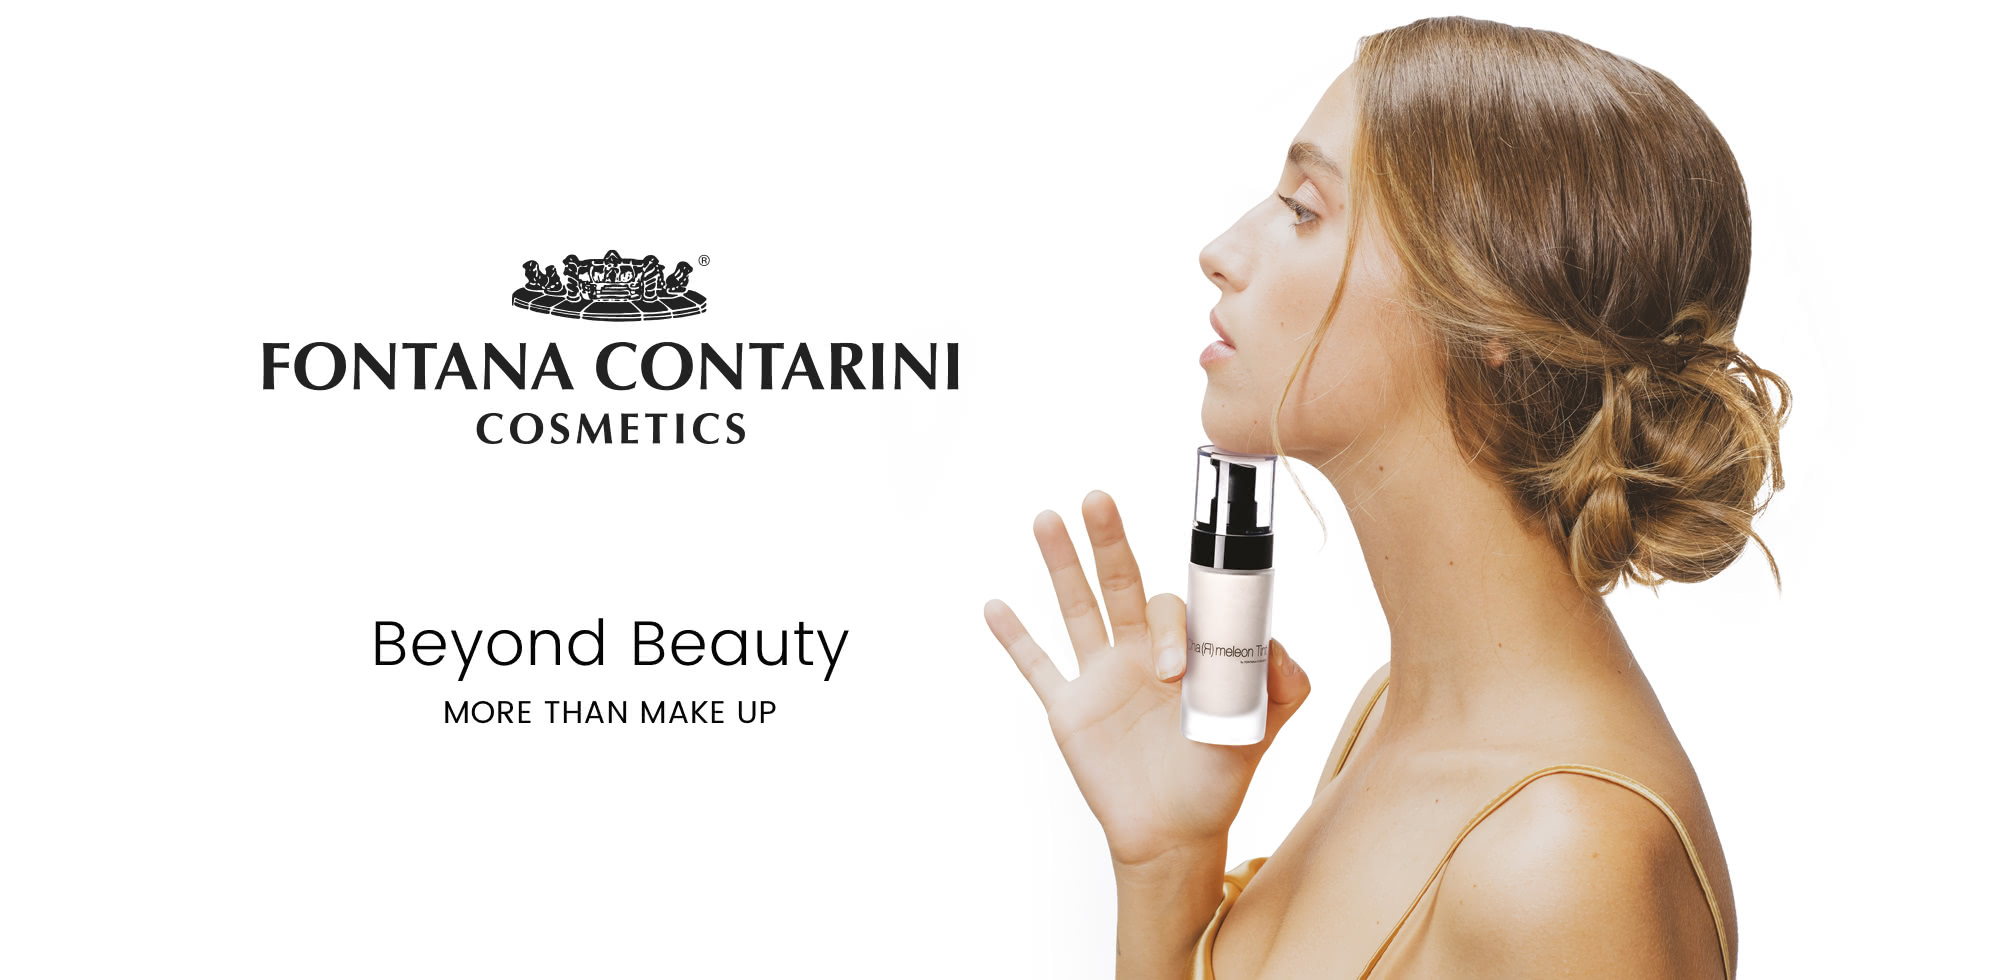 Fontana Contarini - Beyond Beauty - More Than Make Up